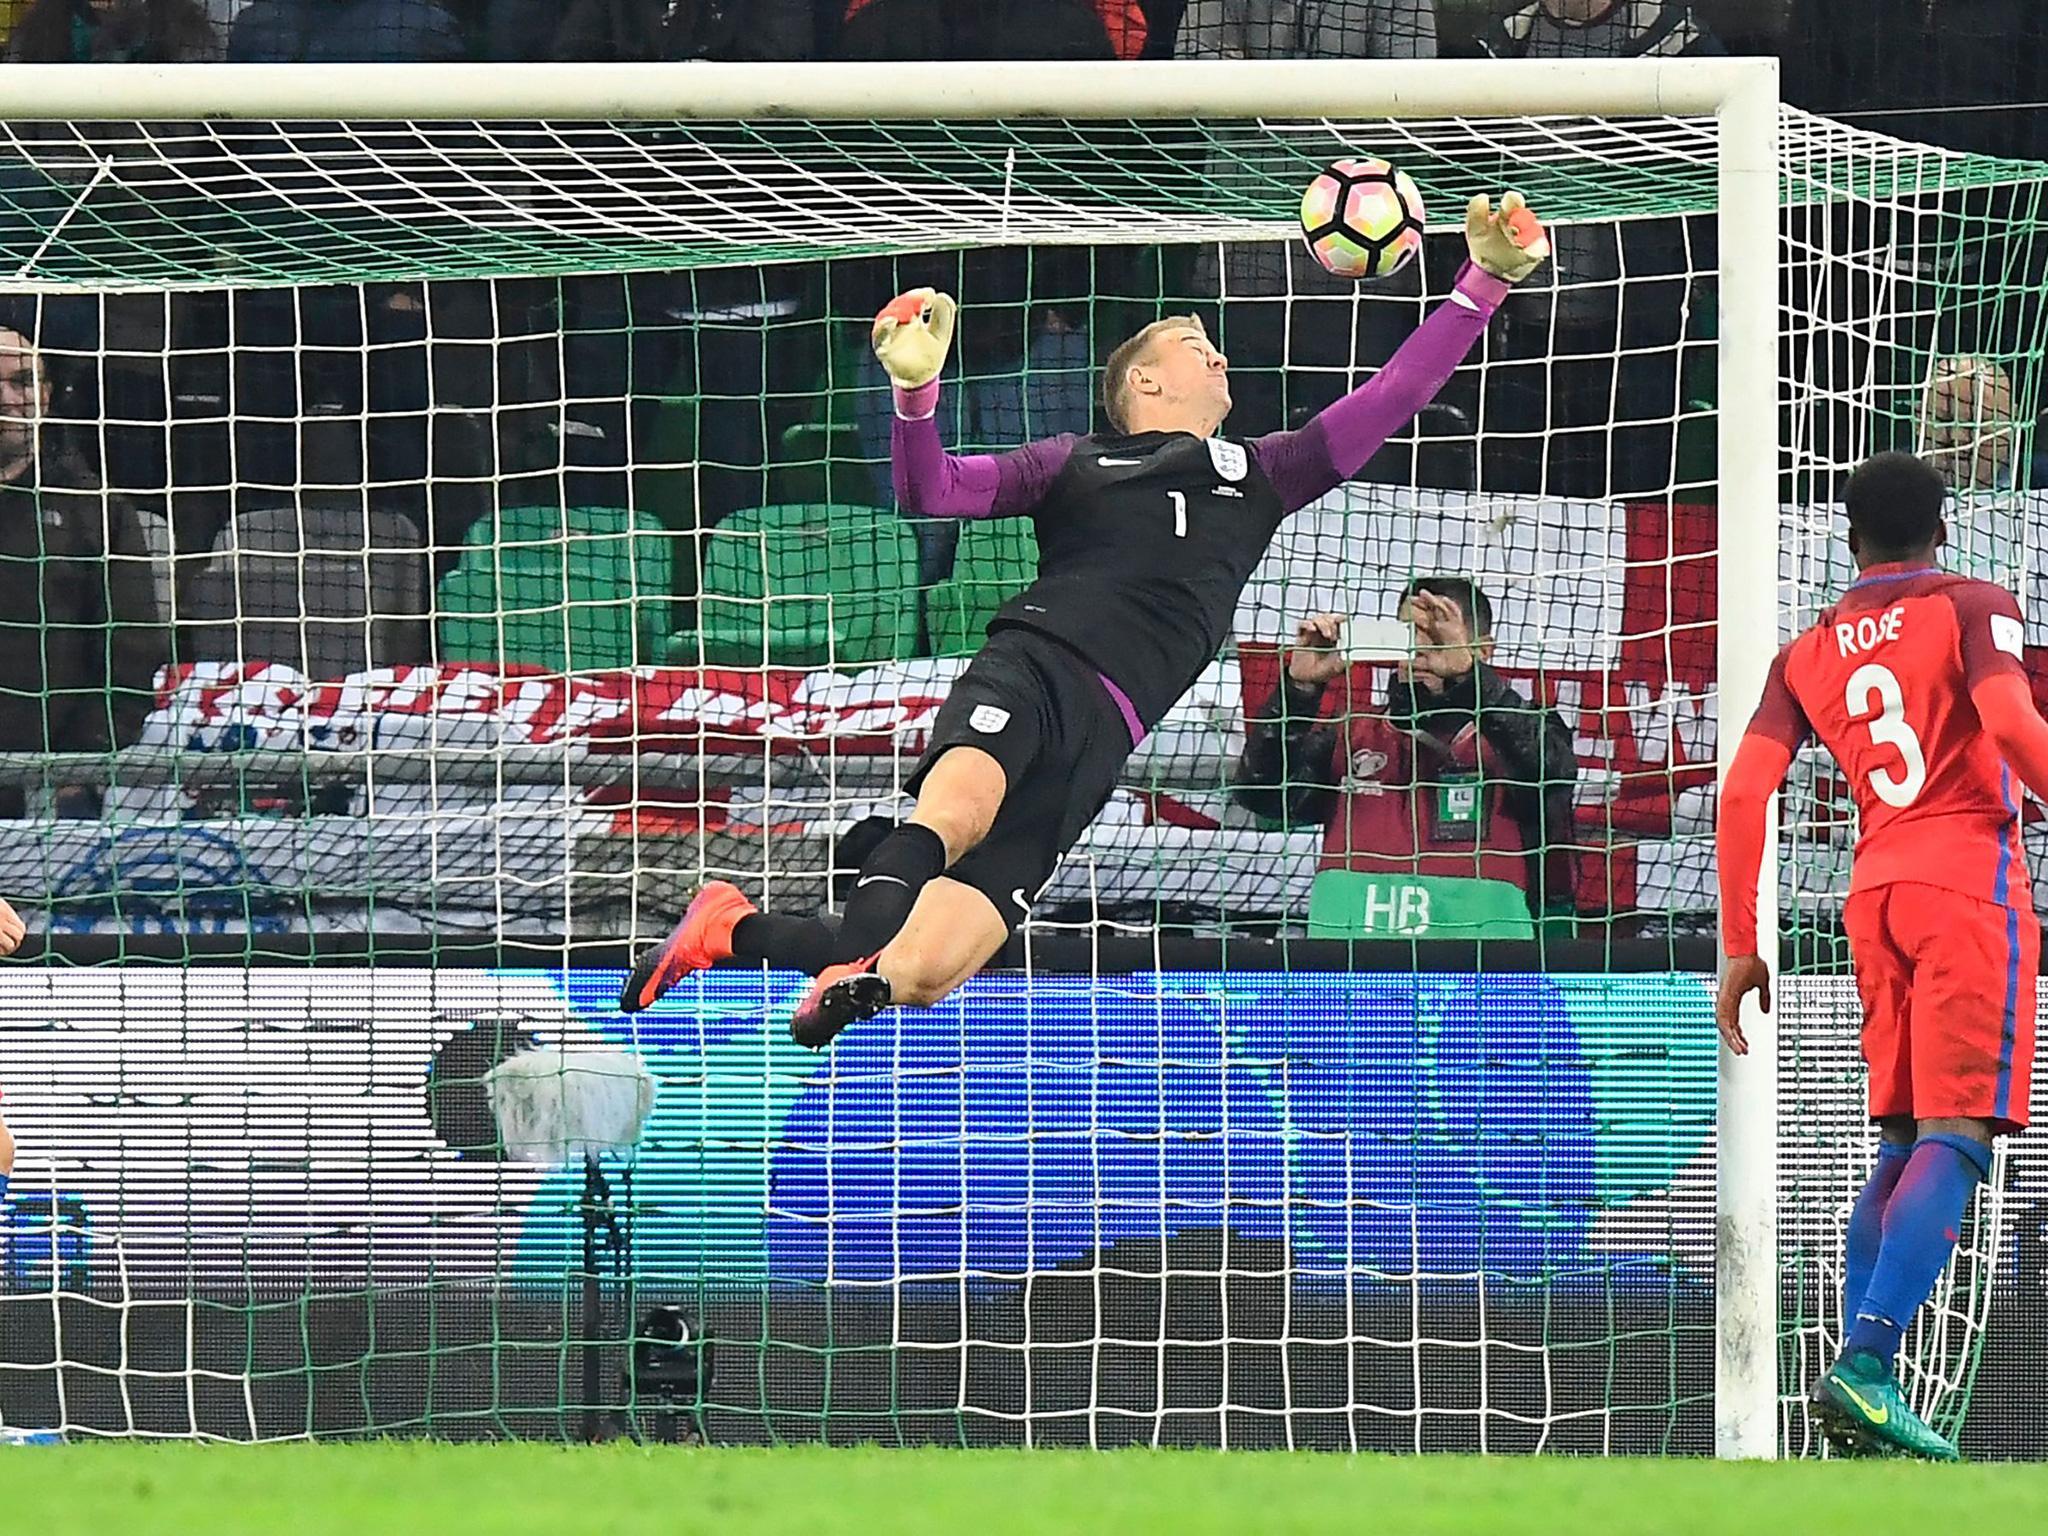 Slovenia vs England match report: Joe Hart's heroics see Gareth